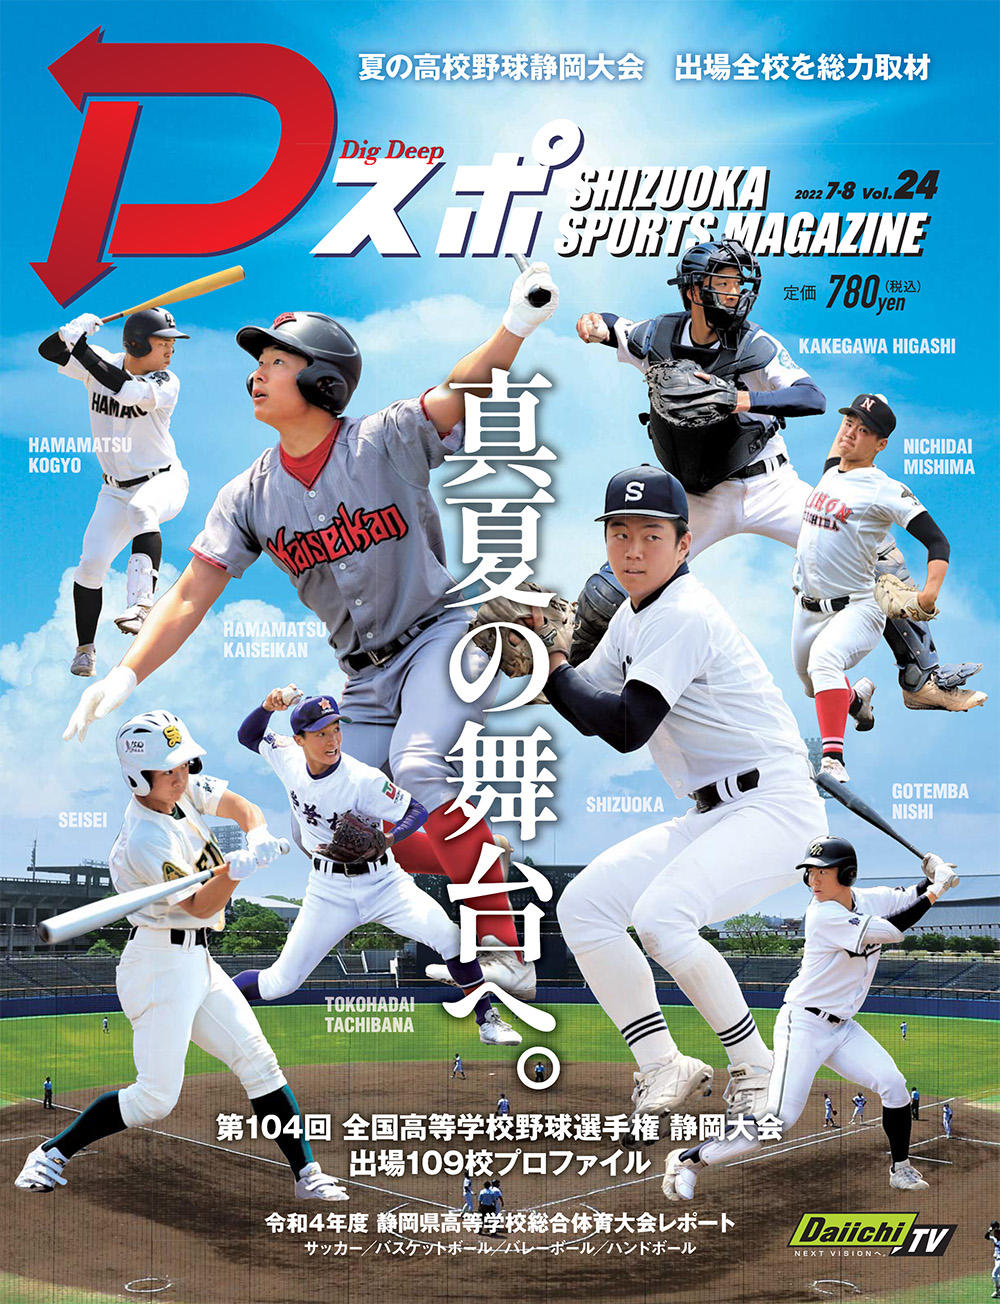 http://d-sports.shizuokastandard.jp/article/2022/24_H1.jpg